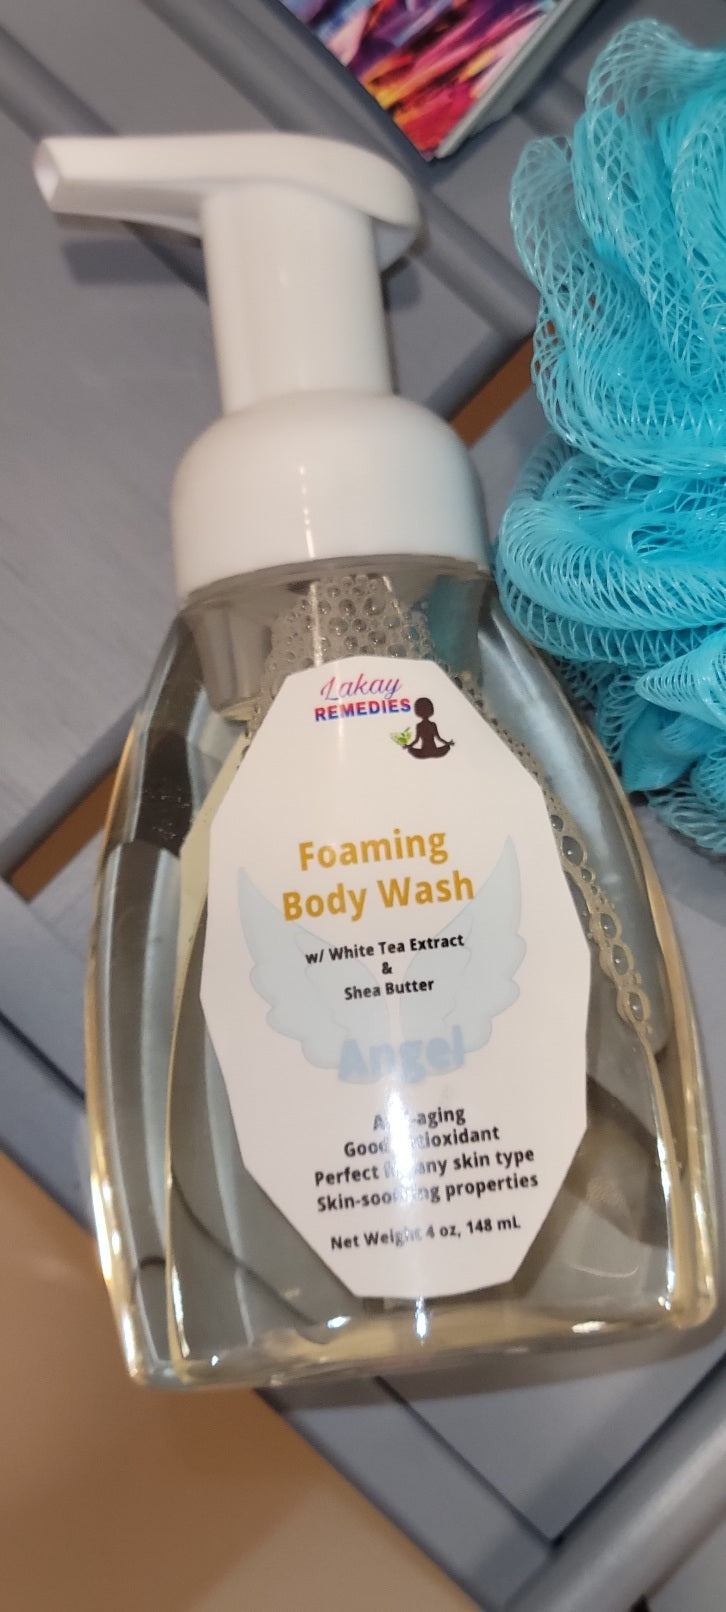 Lakay Remedies Angel Foaming Body Wash